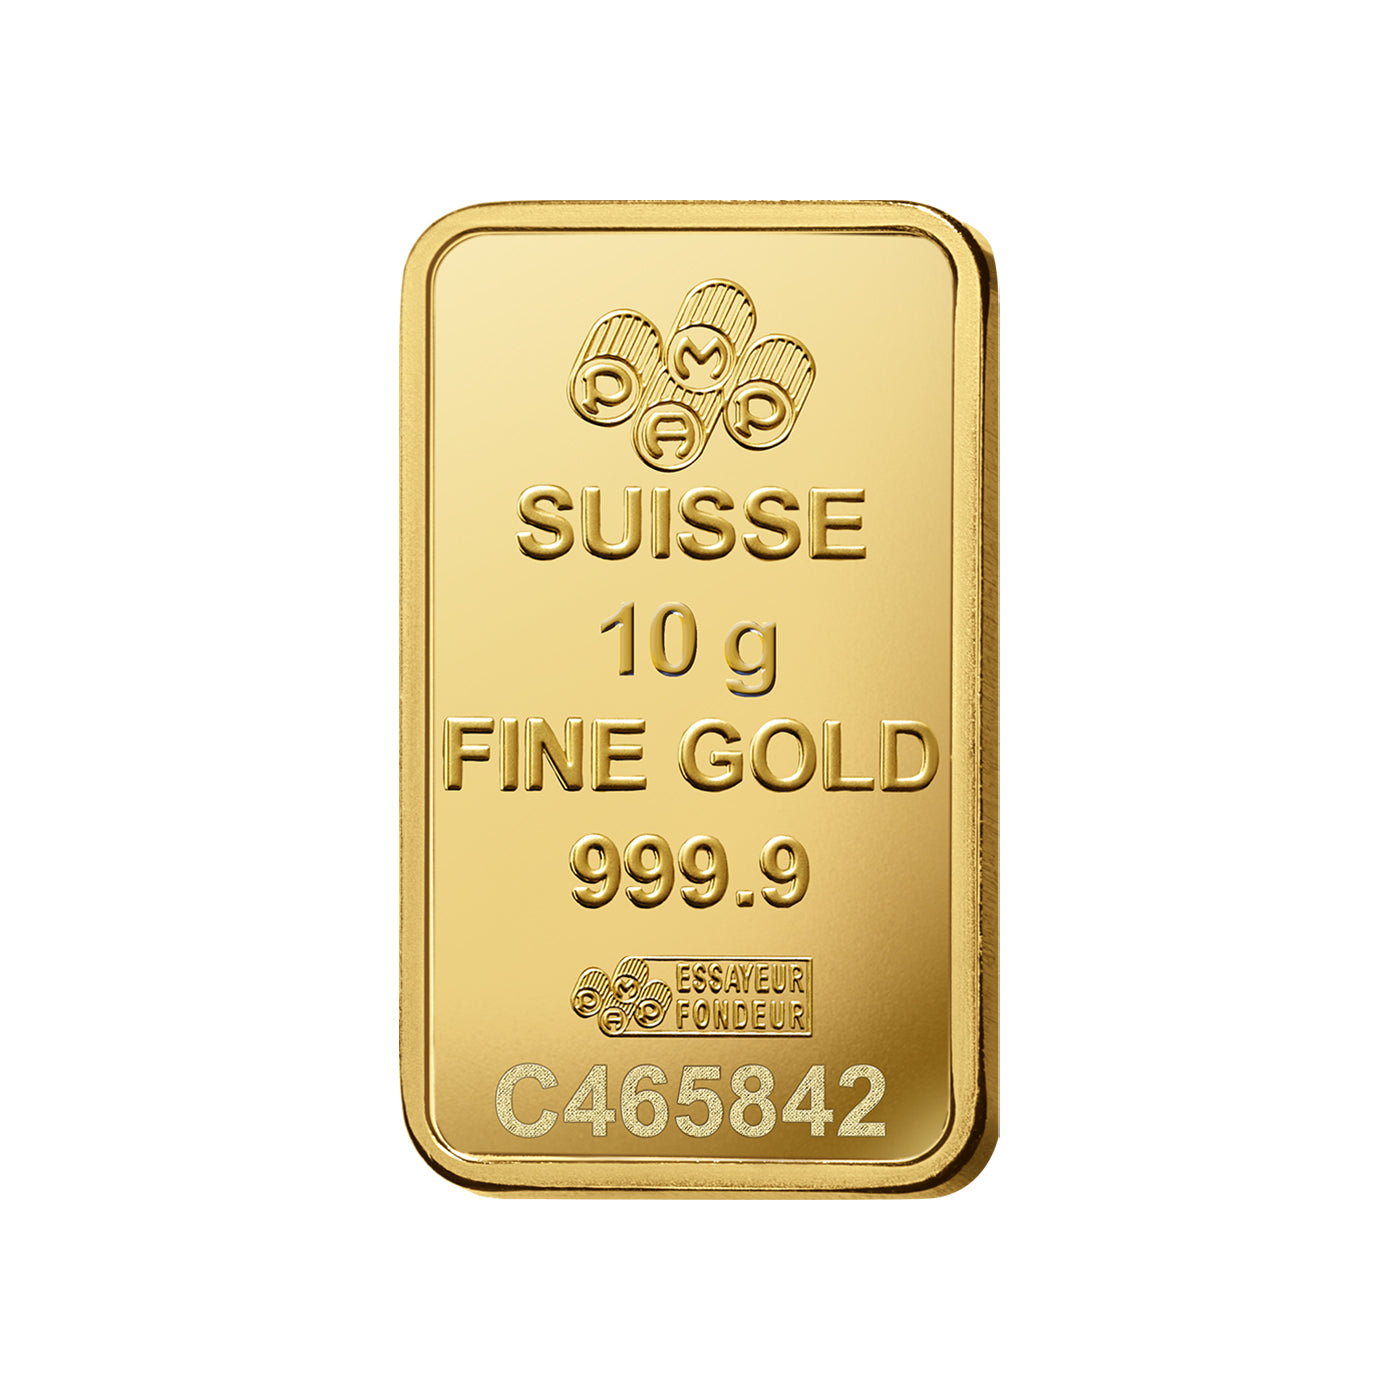 999 Pamp Suisse Gold Bar (10g)